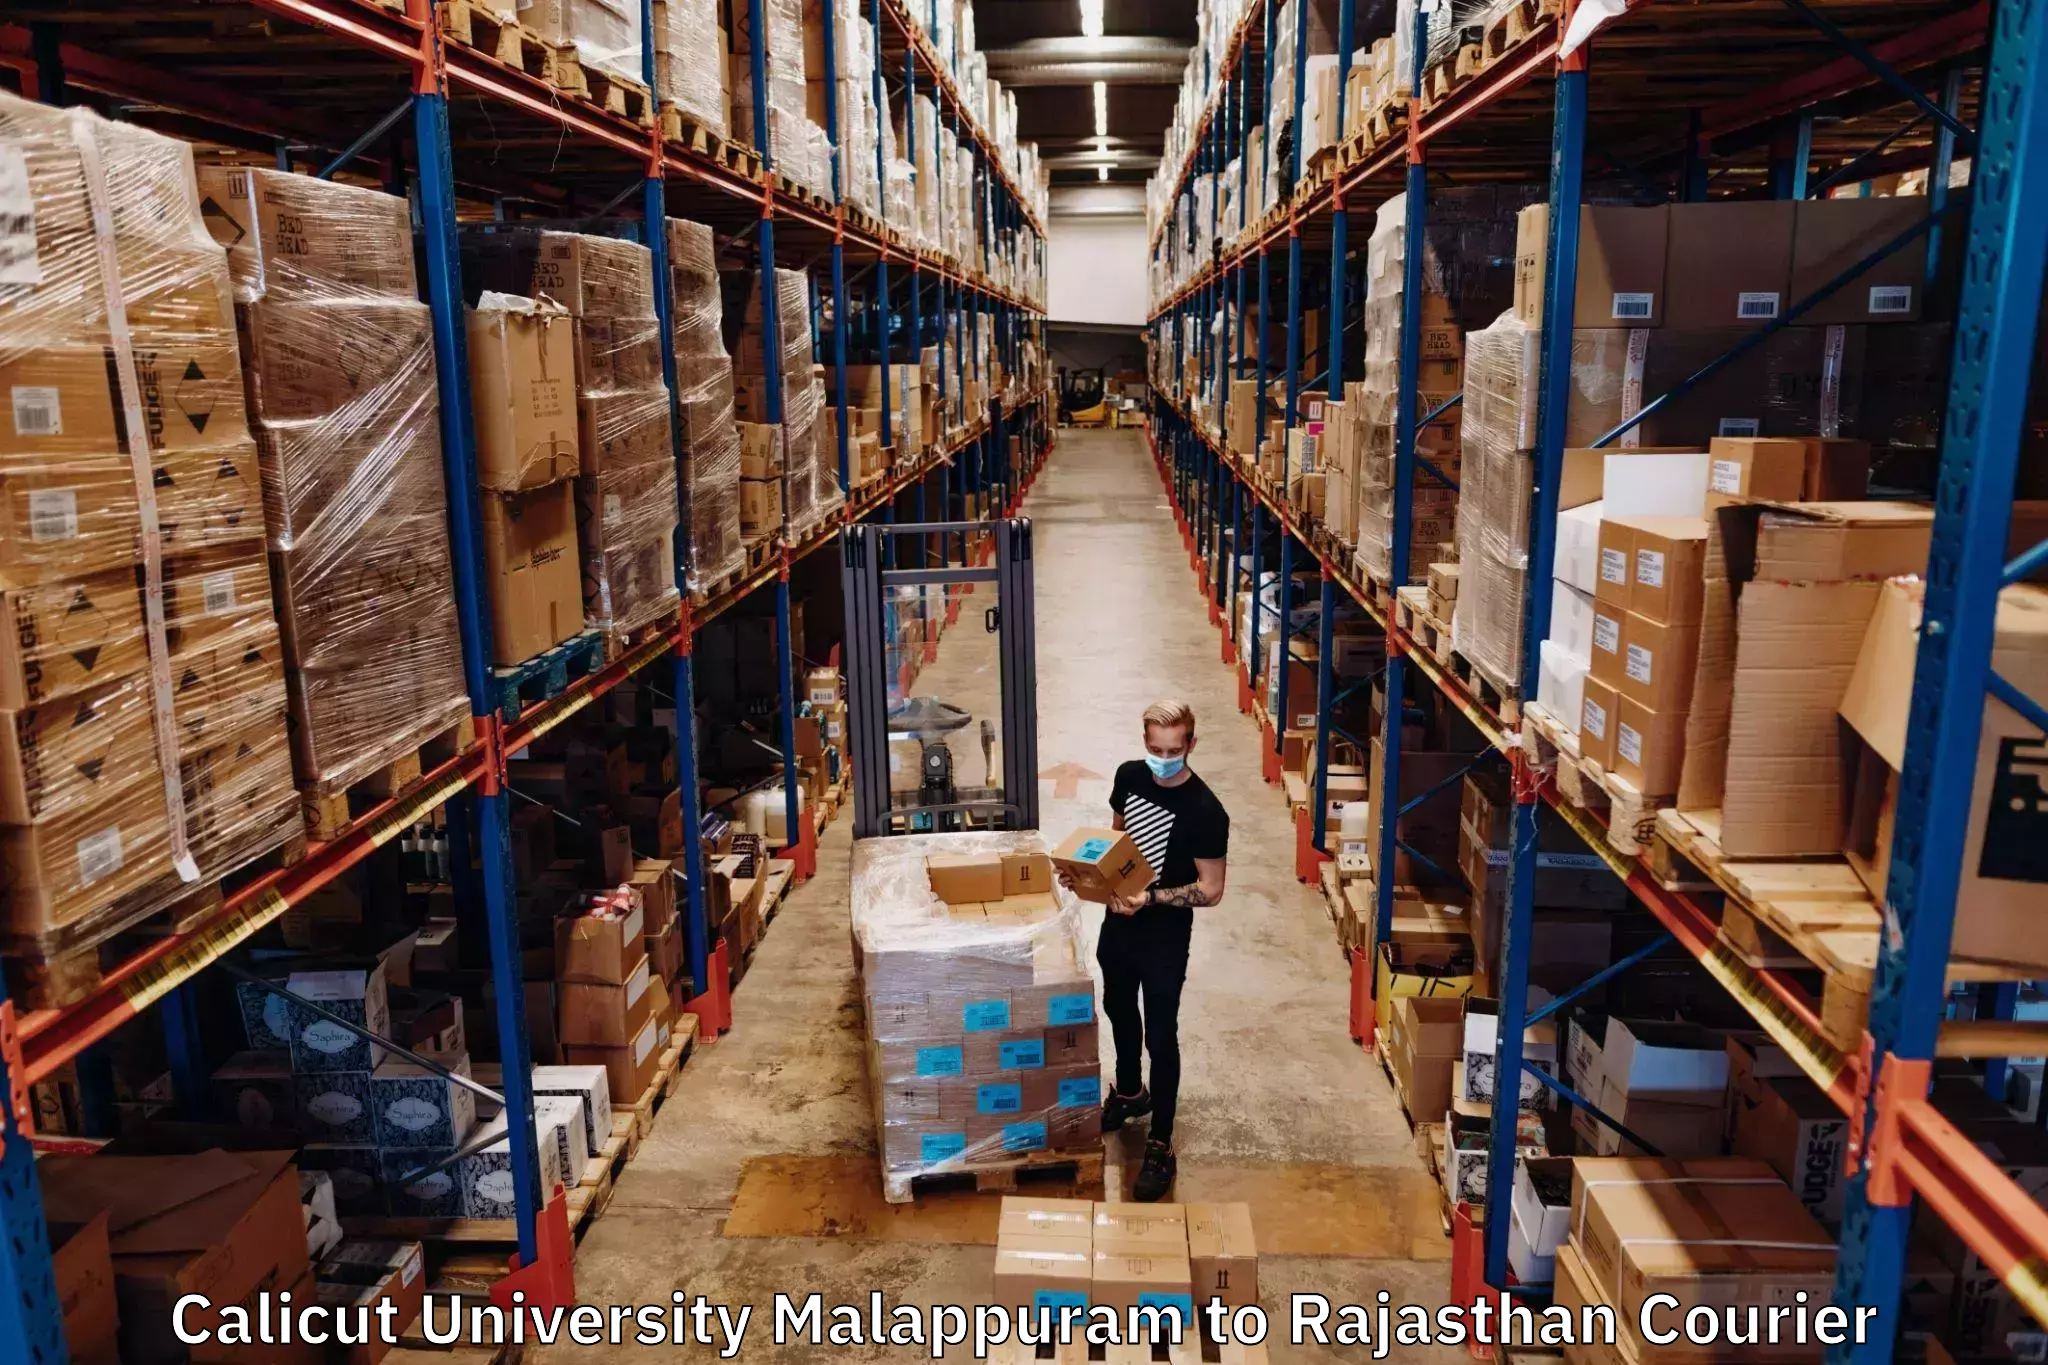 Cash on delivery service Calicut University Malappuram to Rajasthan